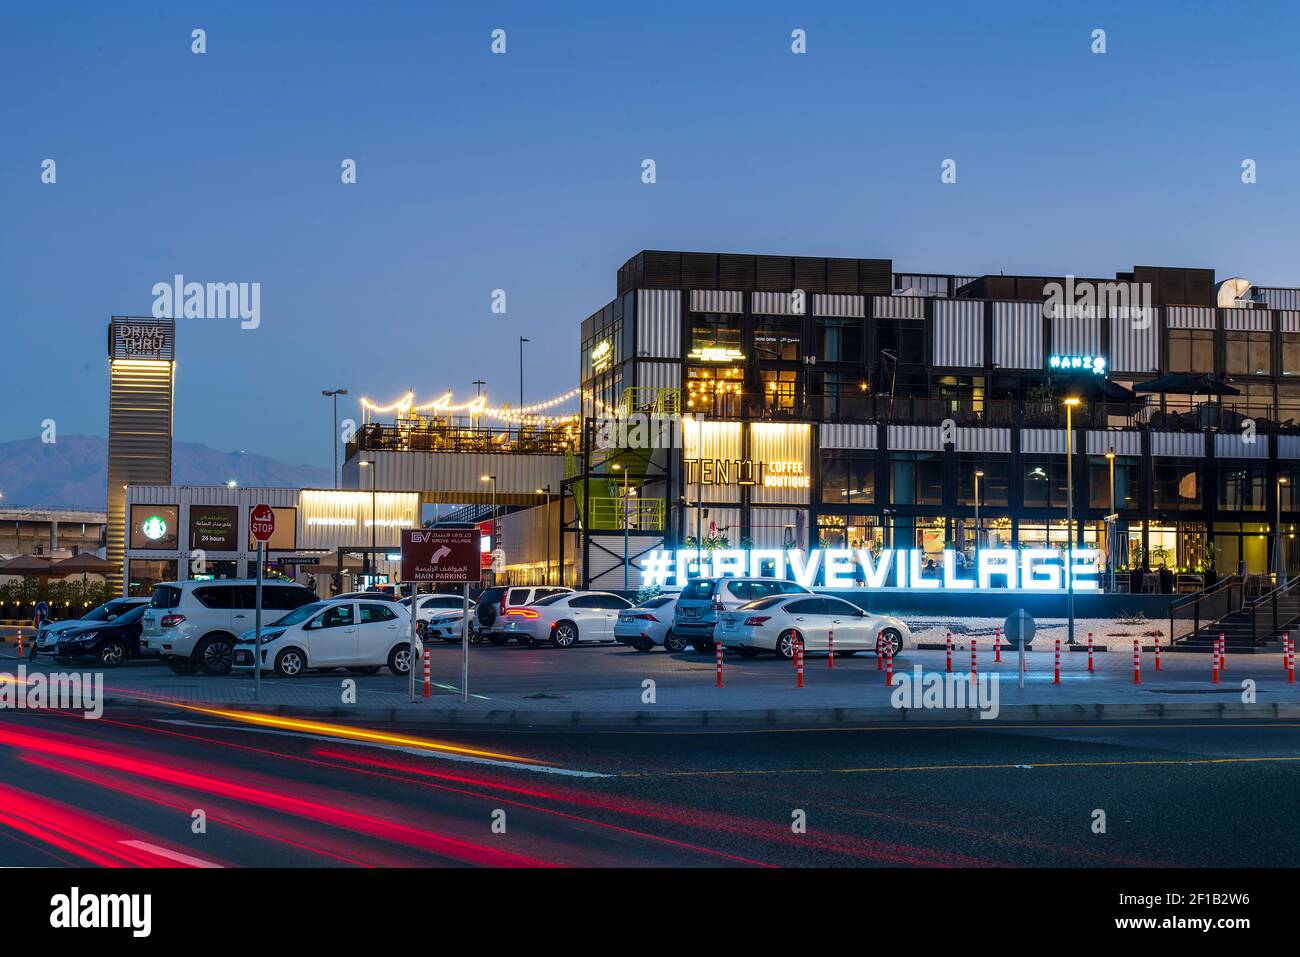 Ras al Khaimah, United Arab Emirates - January 13, 2021: Groove village shopping and leisure area in Ras al Khaimah emirate of United Arab Emirates at Stock Photo